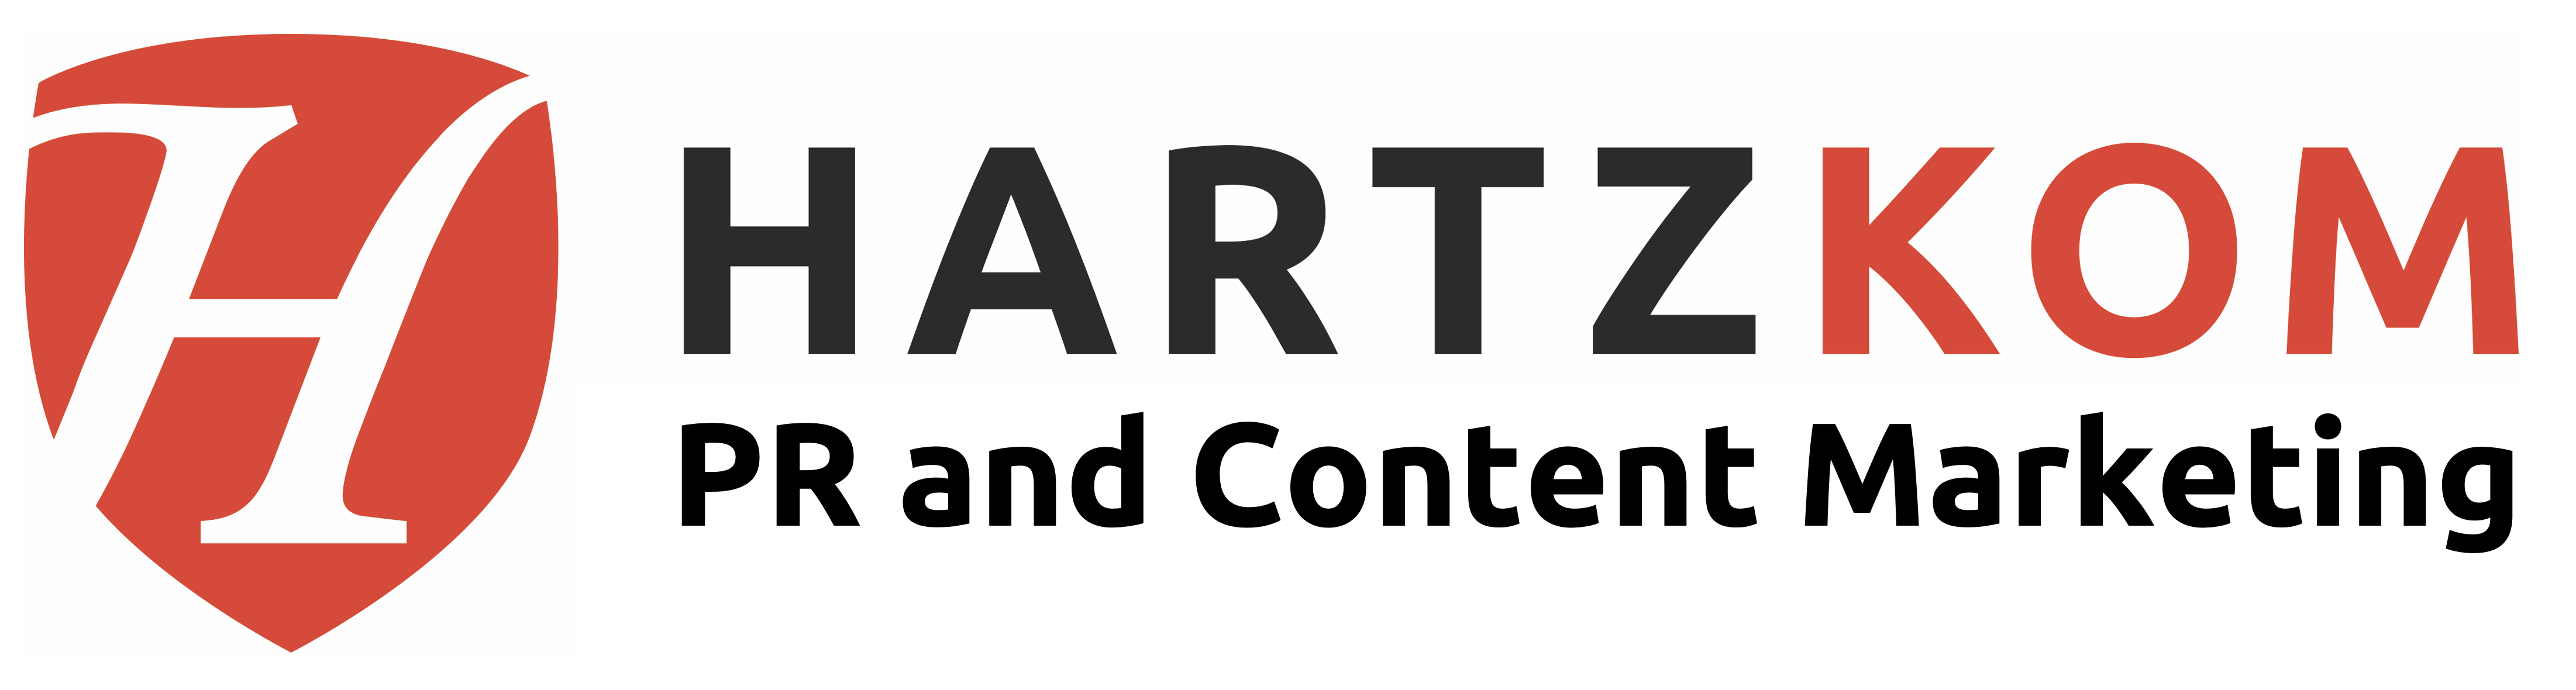 Hartzkom - PR and Content Marketing